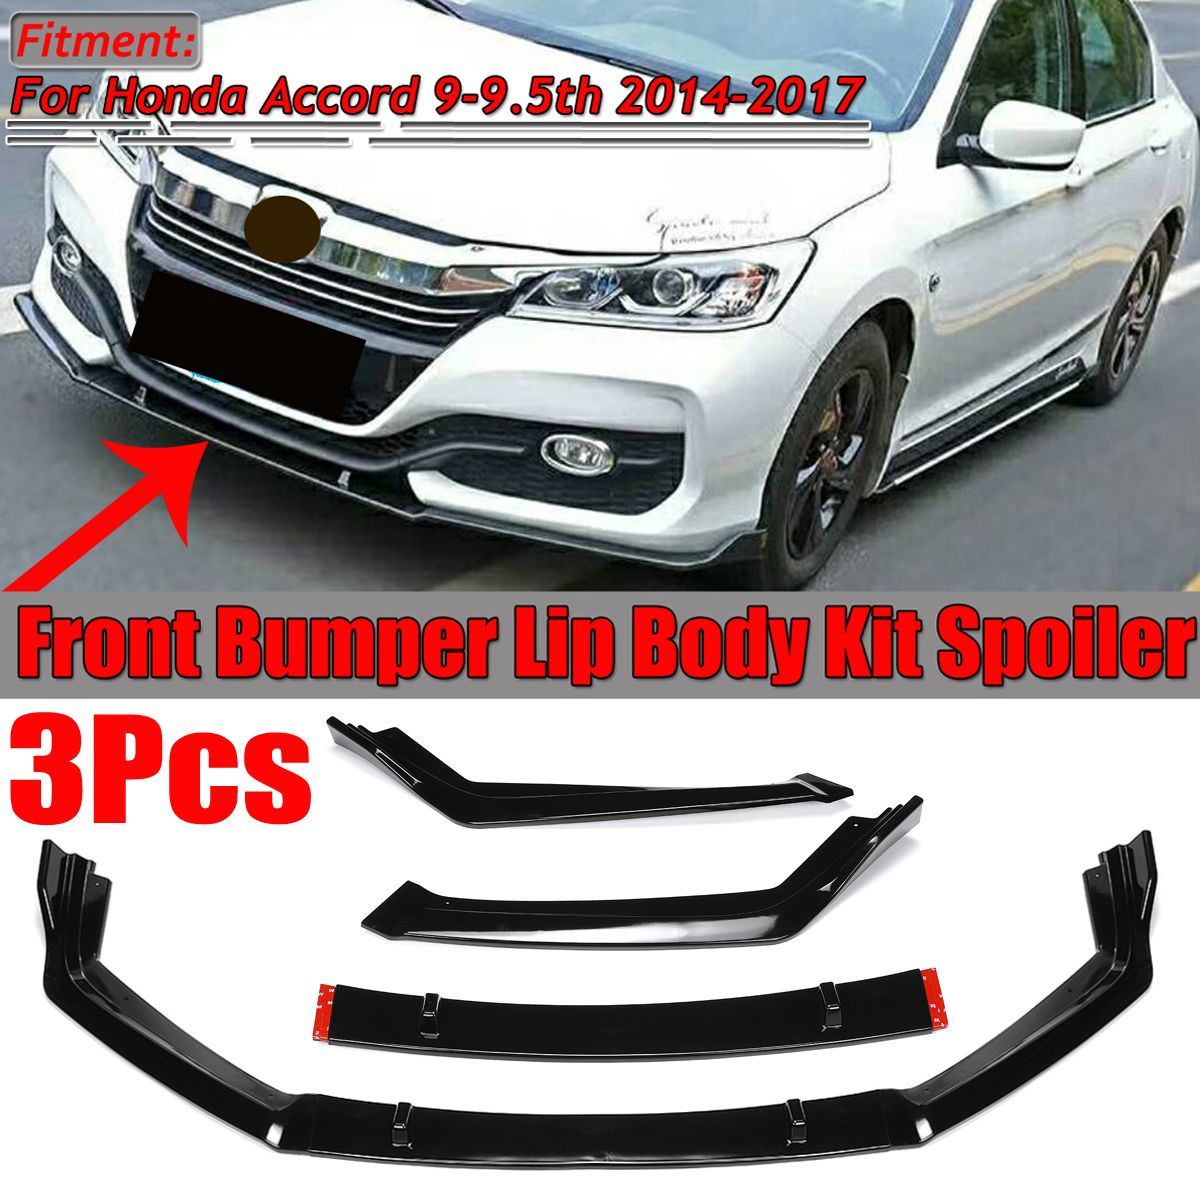 Front-Bumper-Lip-Body-Kit-Spoiler-Gloss-Black-For-Honda-Accord-9-95th-2014-2017-1720624